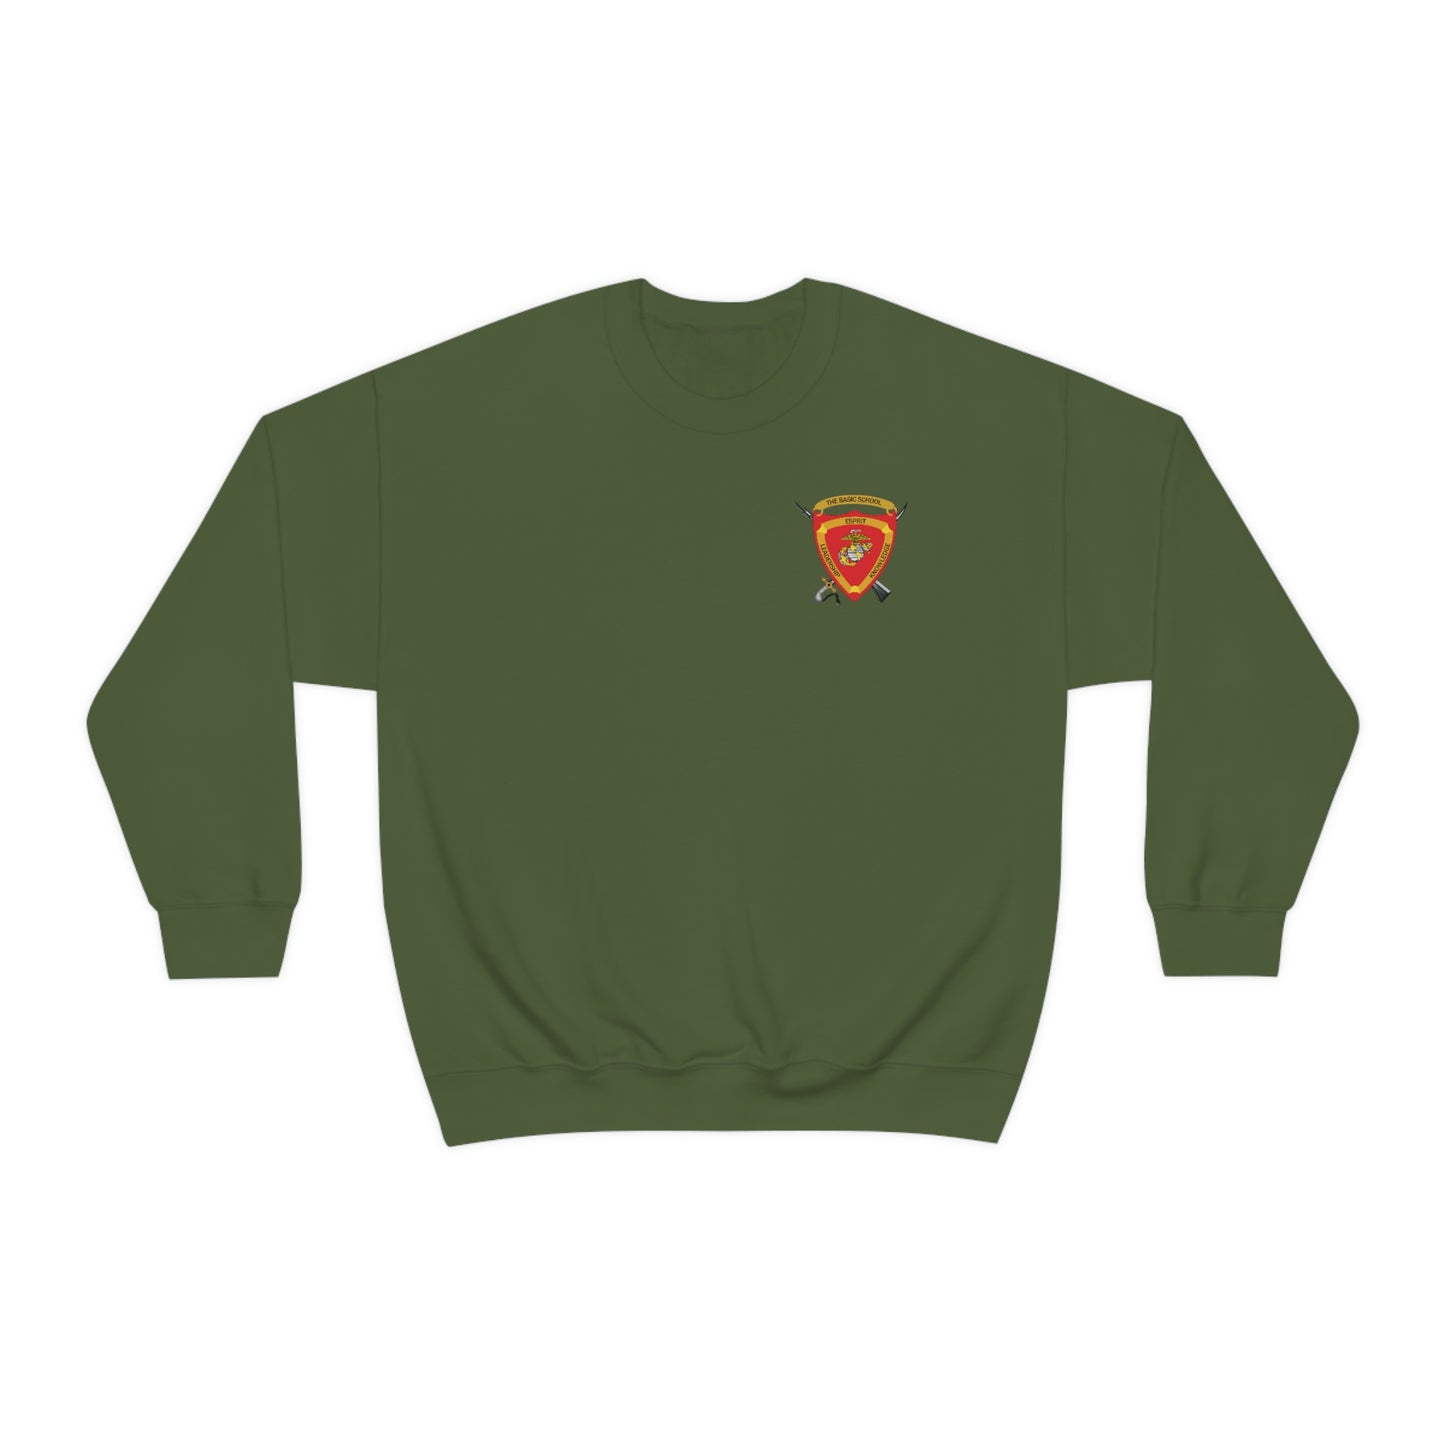 The Basic School Alpha Company Sweatshirt